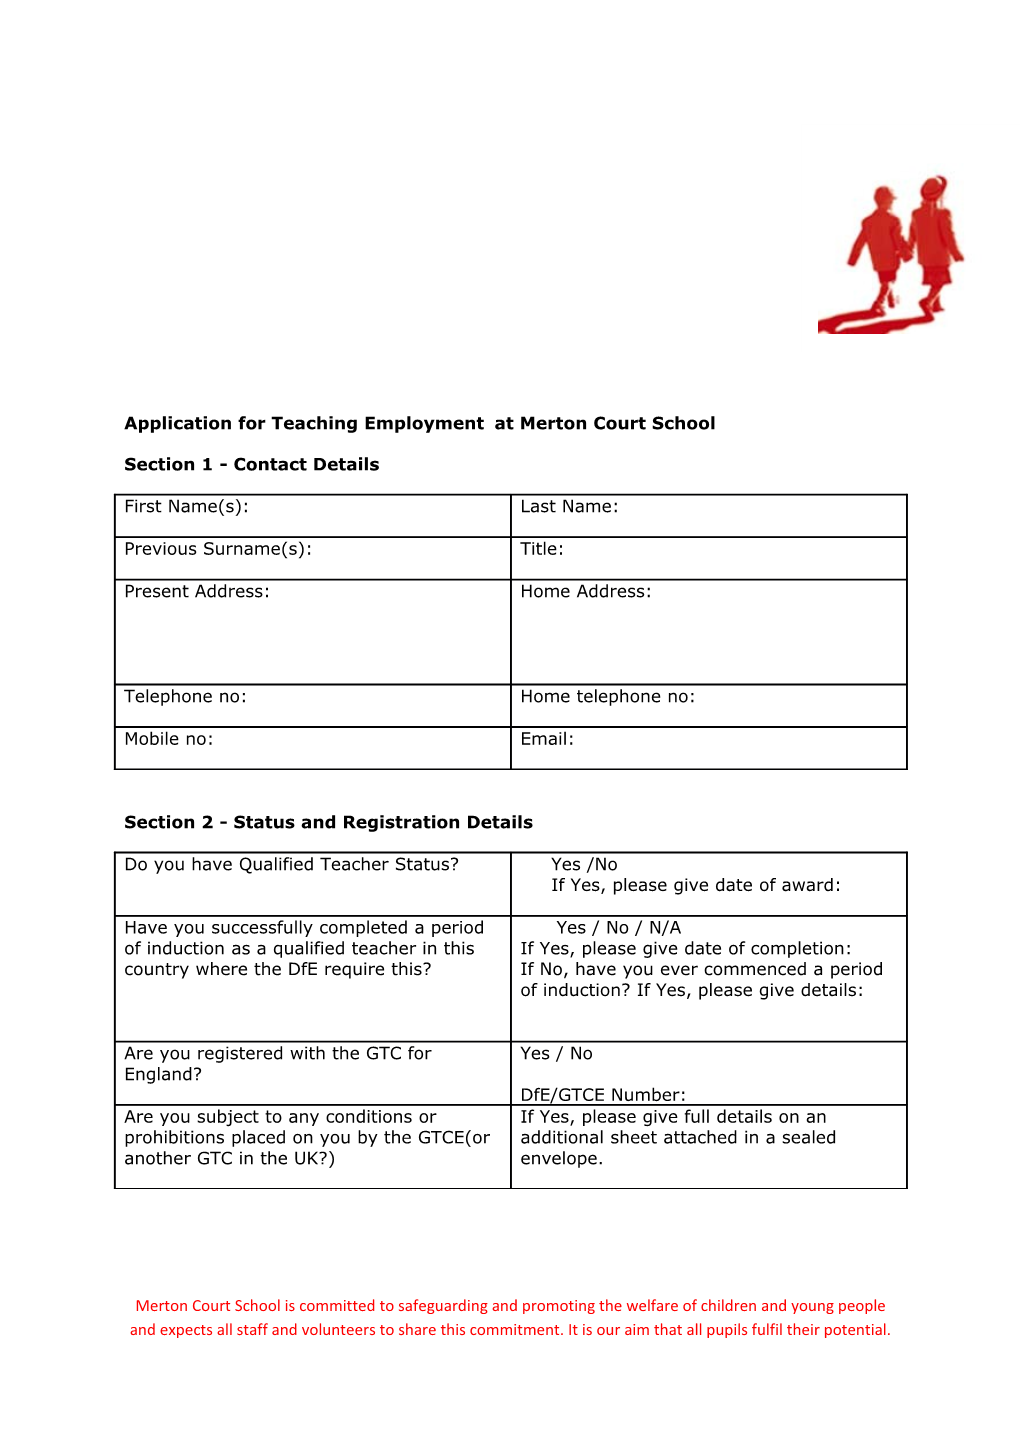 Application for Teaching Employmentat Merton Court School